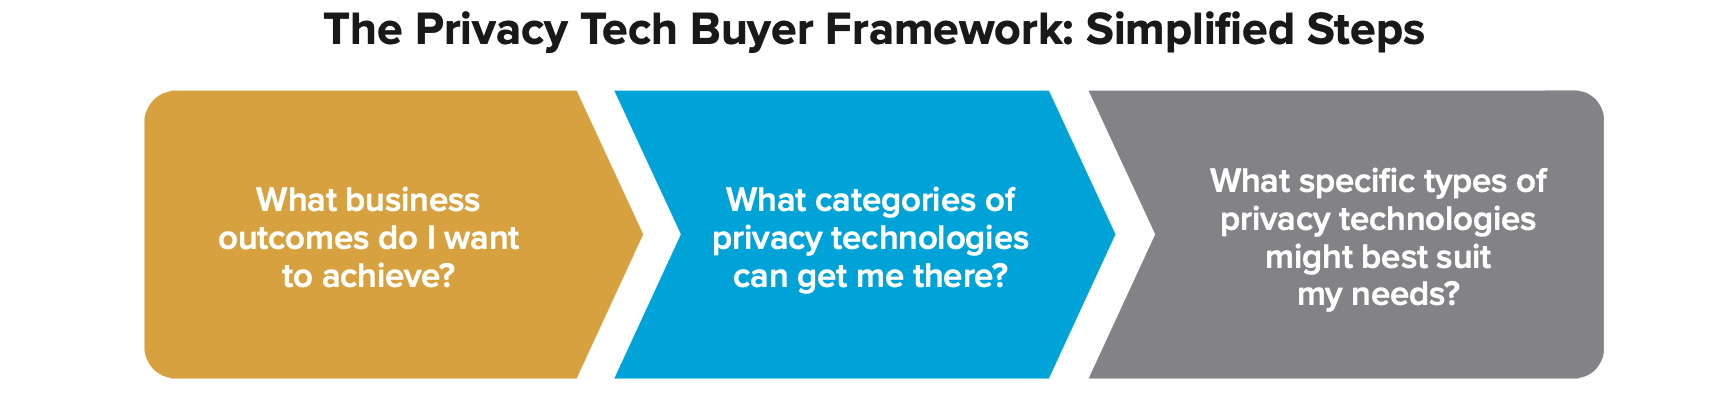 privacy tech buyer framework simplified steps